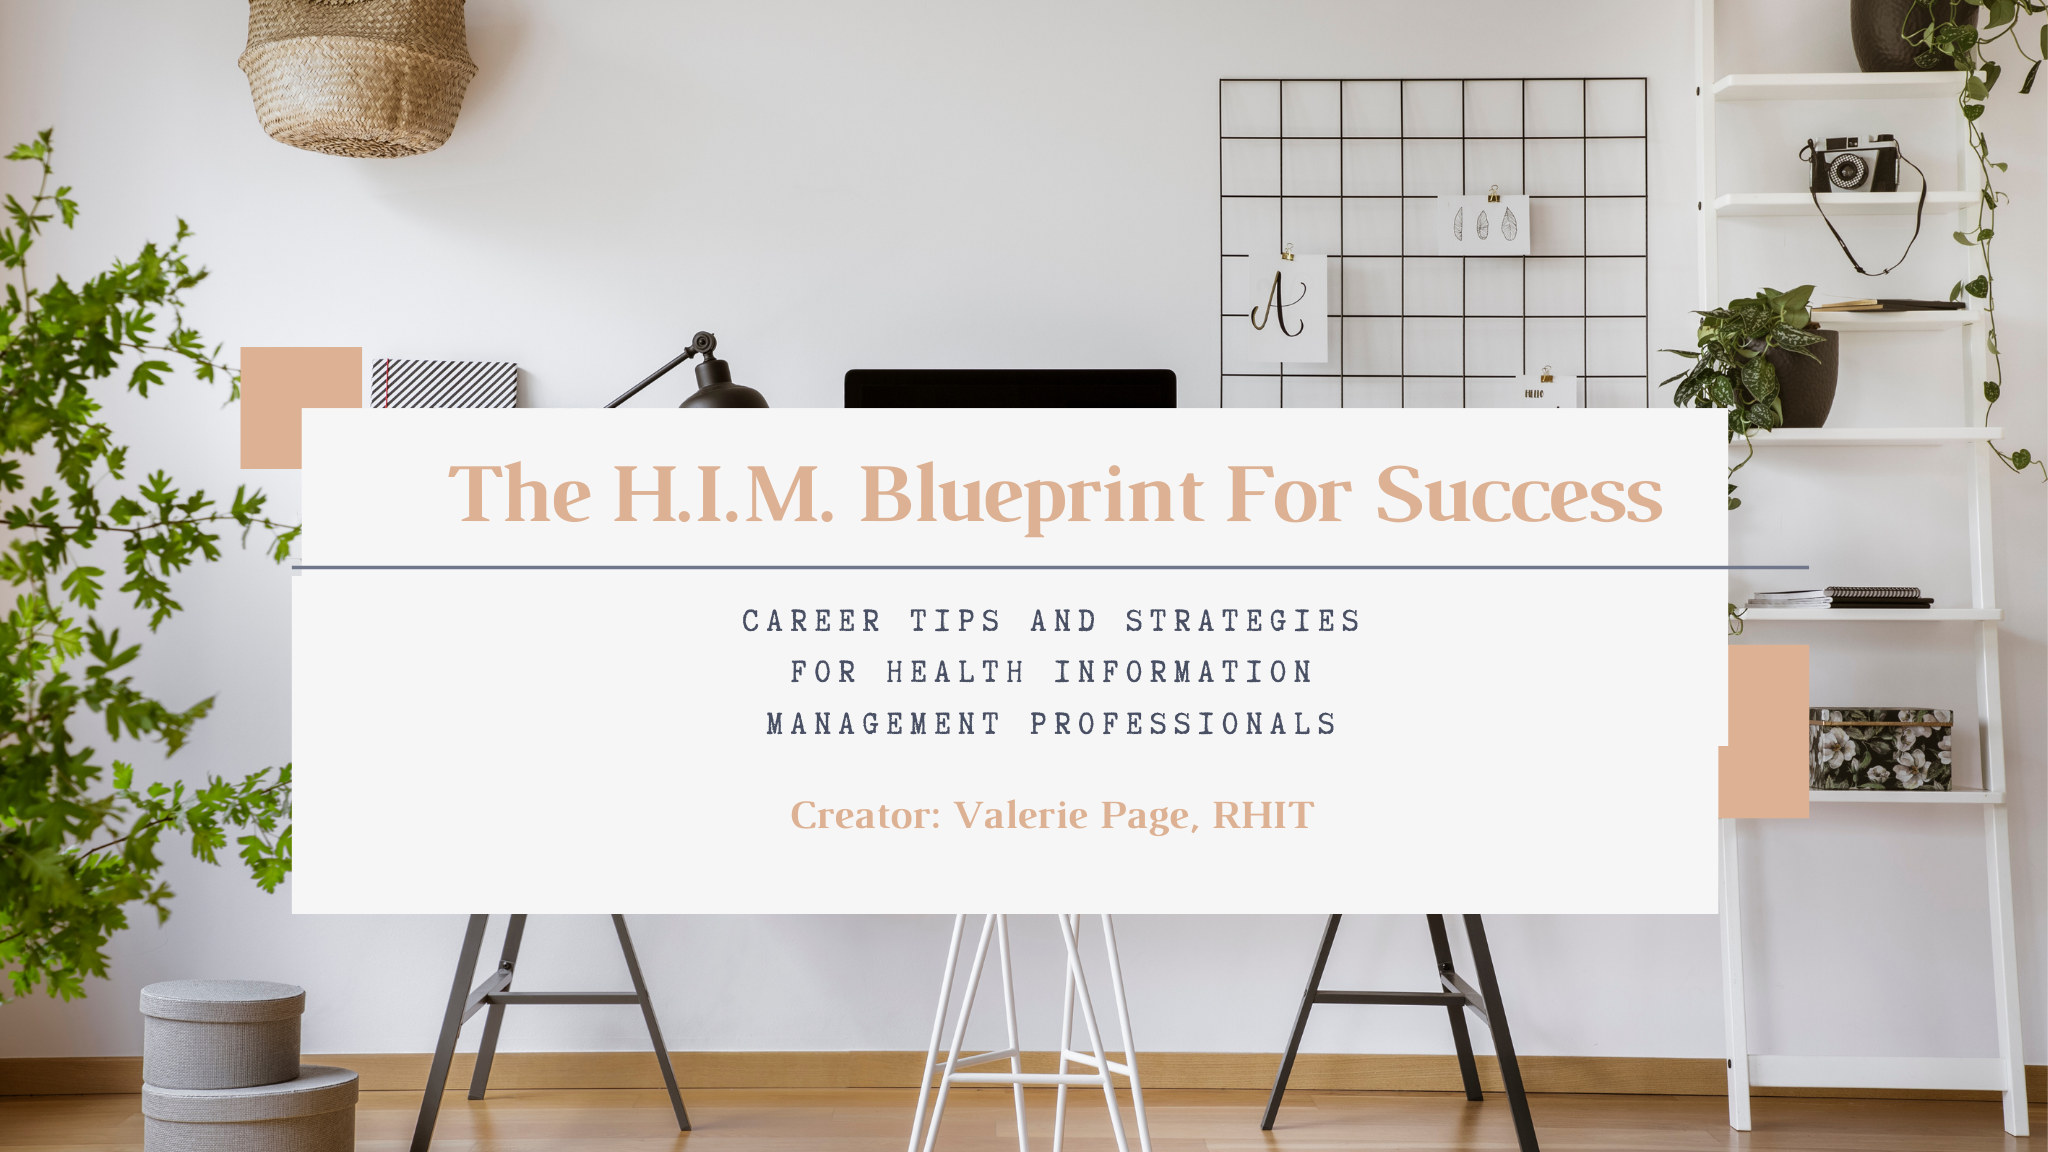 The H.I.M. Blueprint for Success